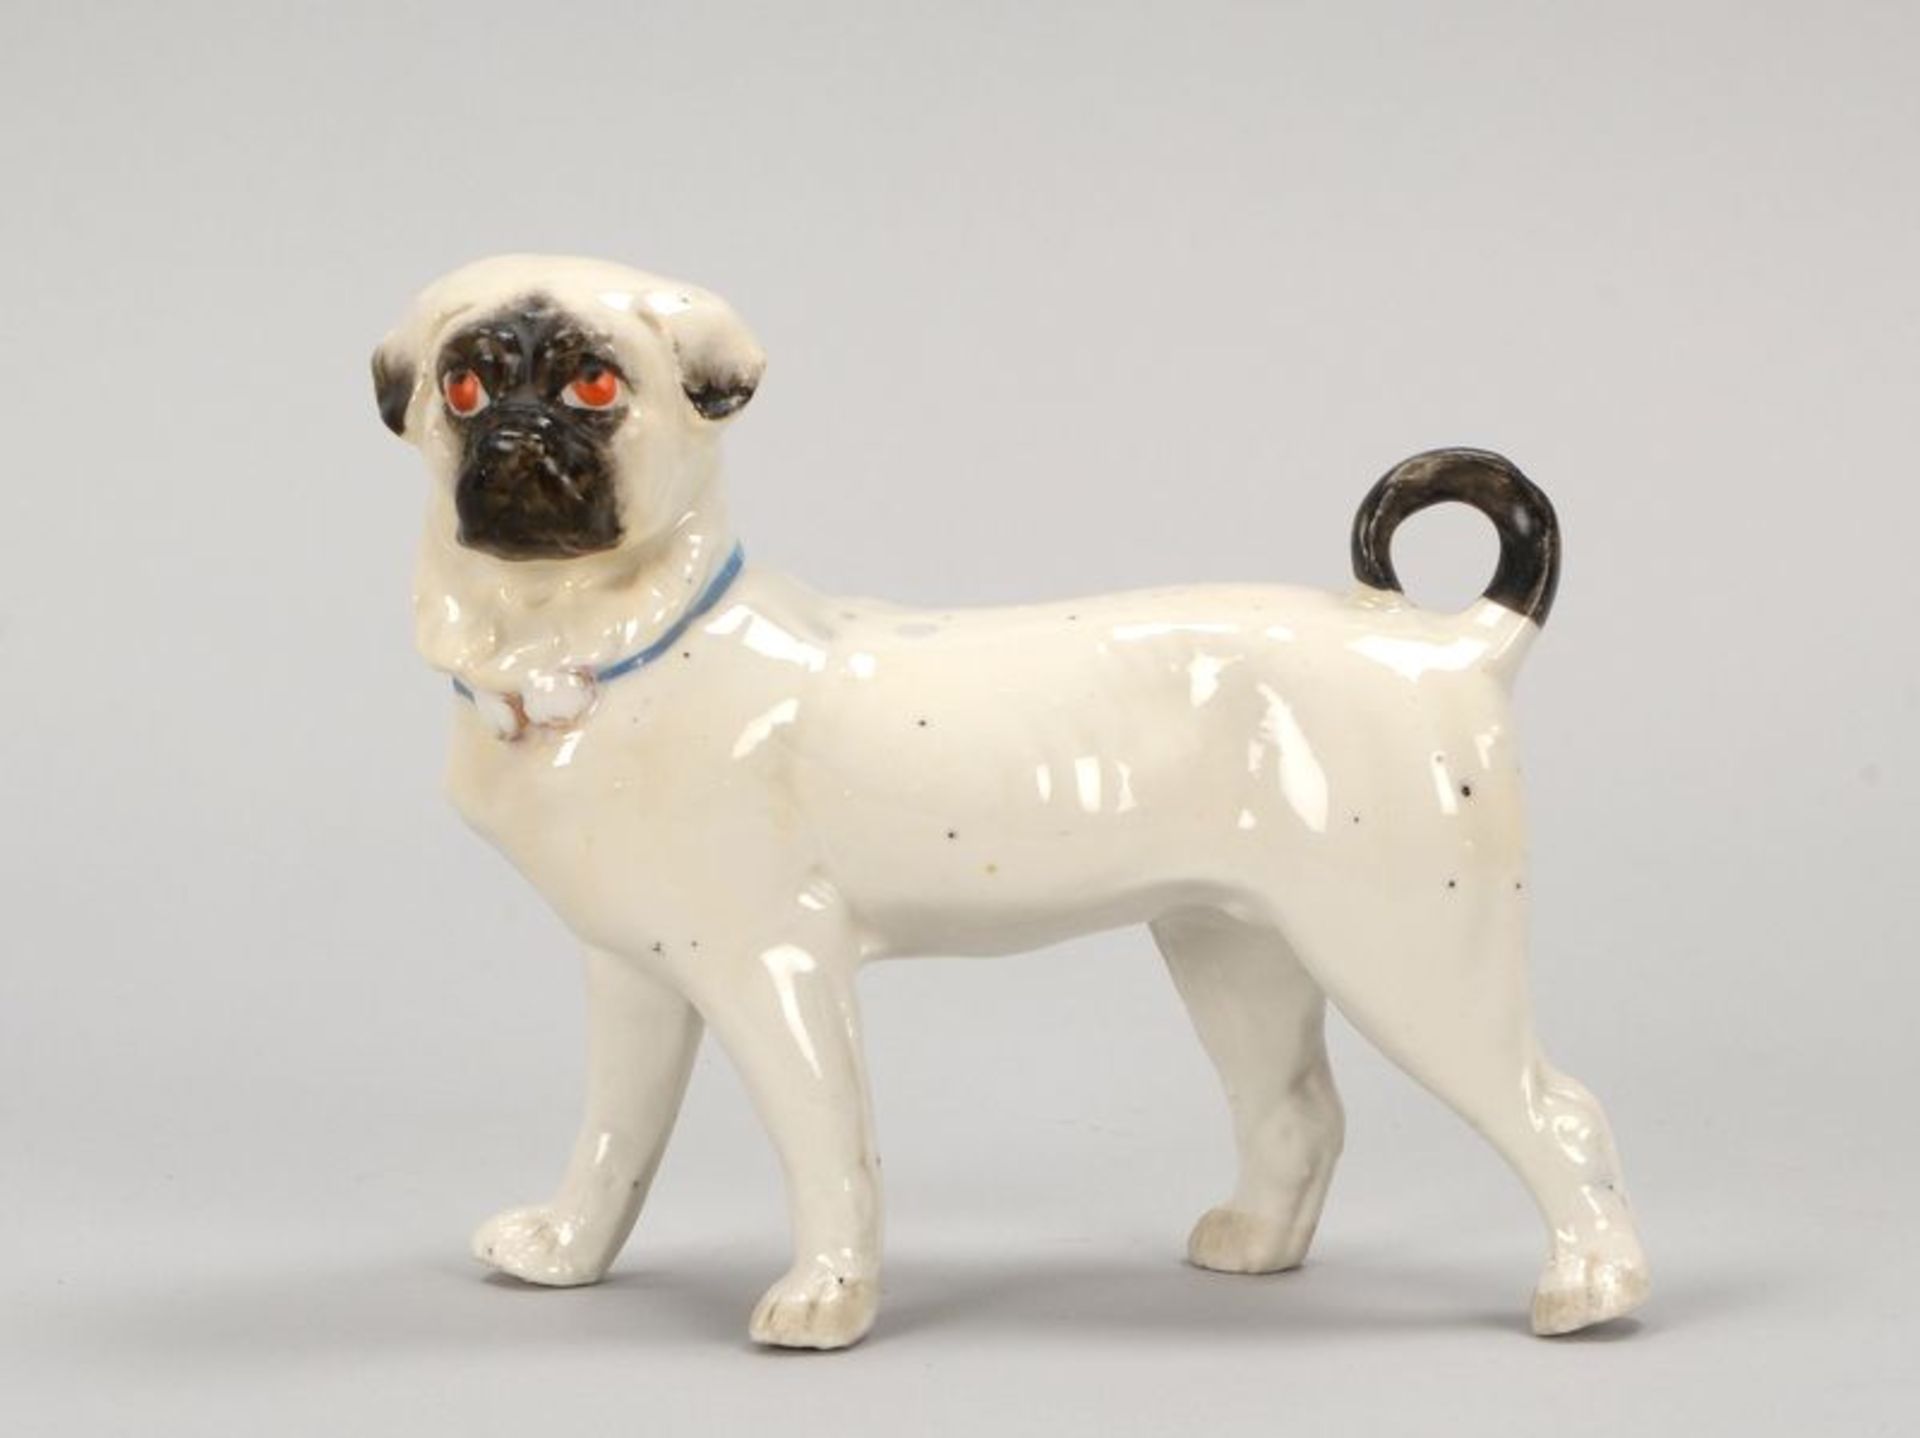 Porzellanfigur (England), antik, 'Mops' - 'Bulldog'; Höhe 12,5 cm, Breite 14,5 cm